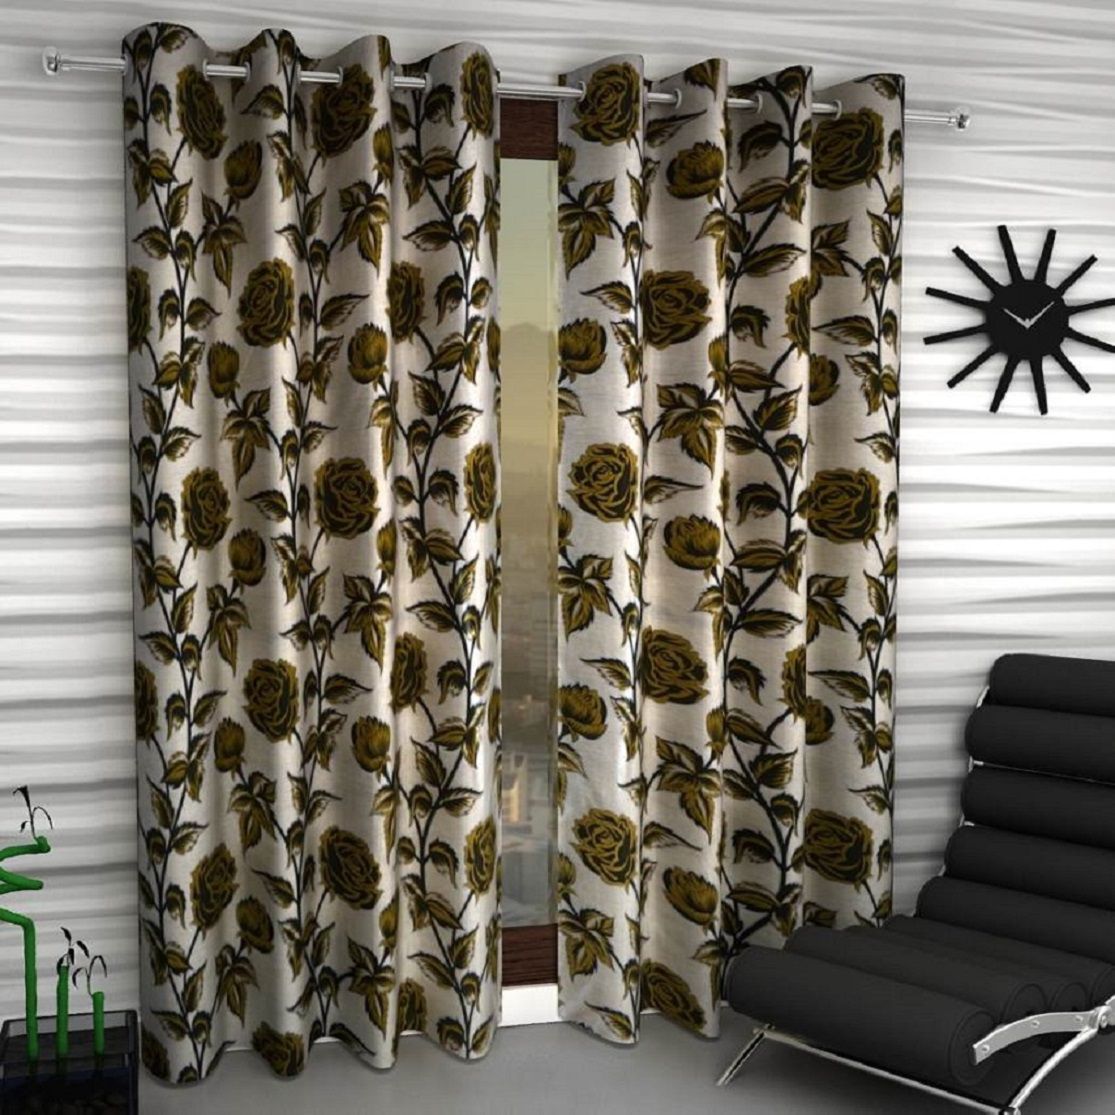     			Tanishka Fabs Semi-Transparent Curtain 5 ft ( Pack of 2 ) - Green